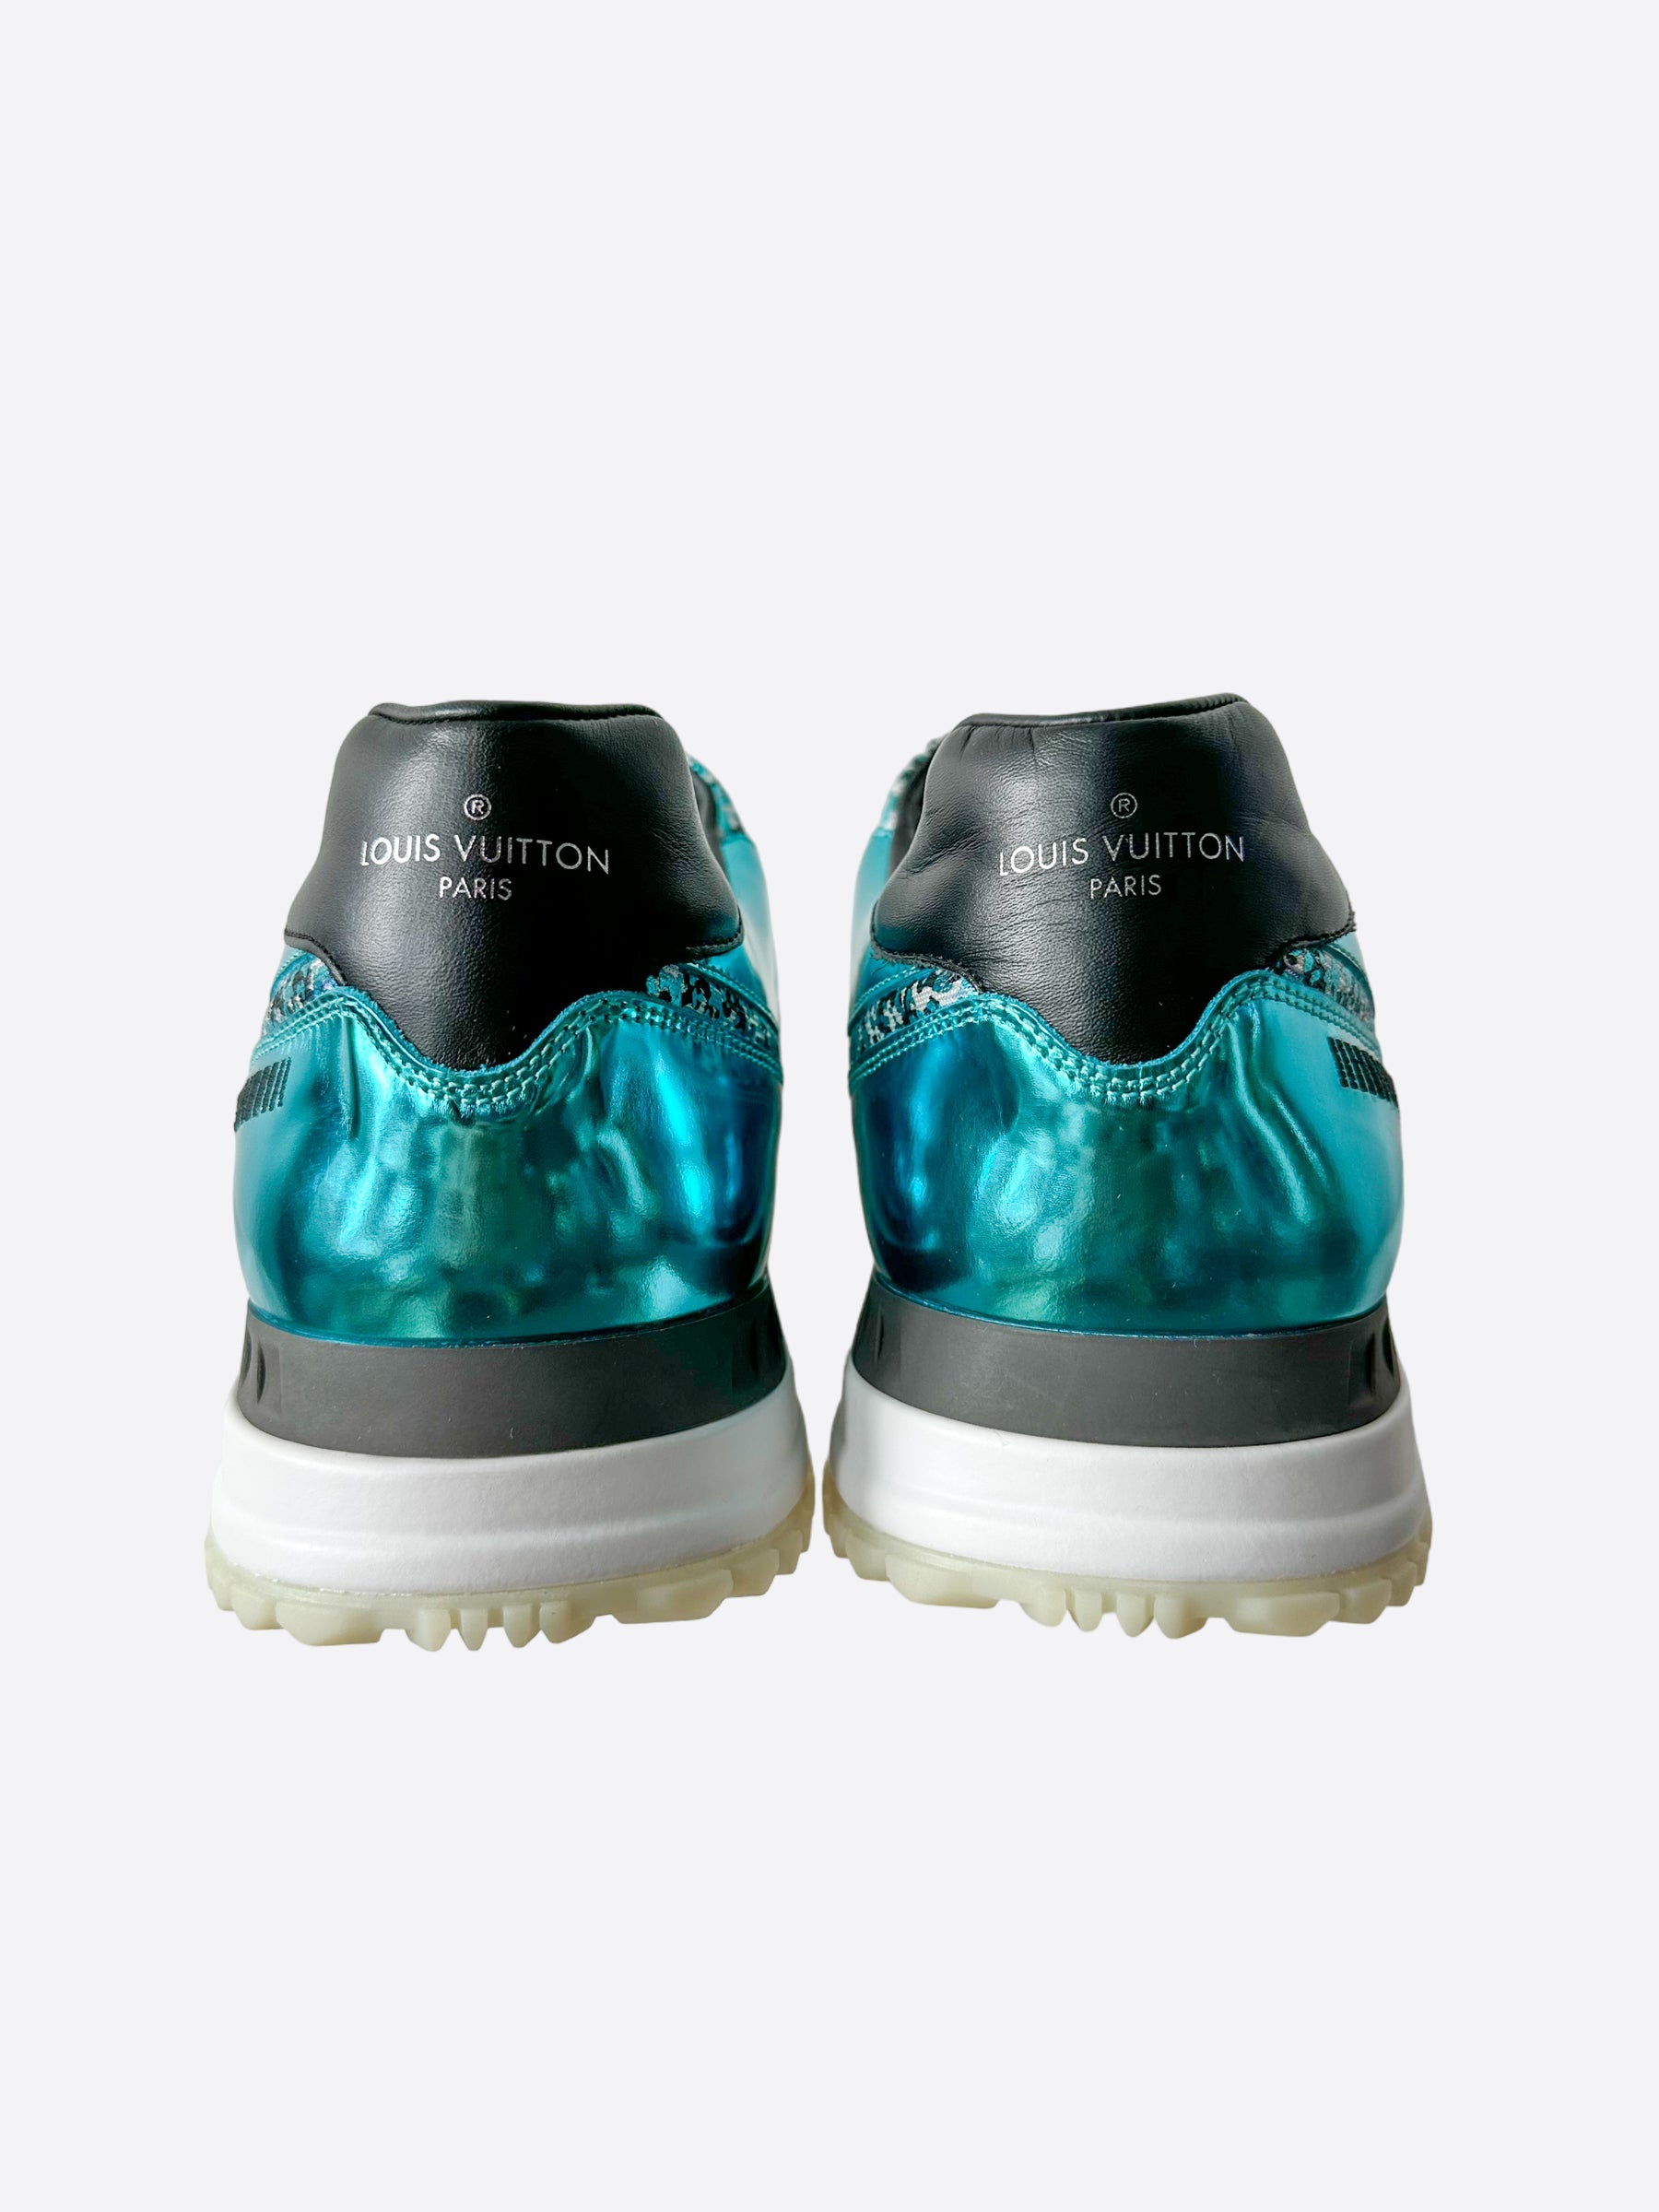 Louisvuitton Run Away Sneaker